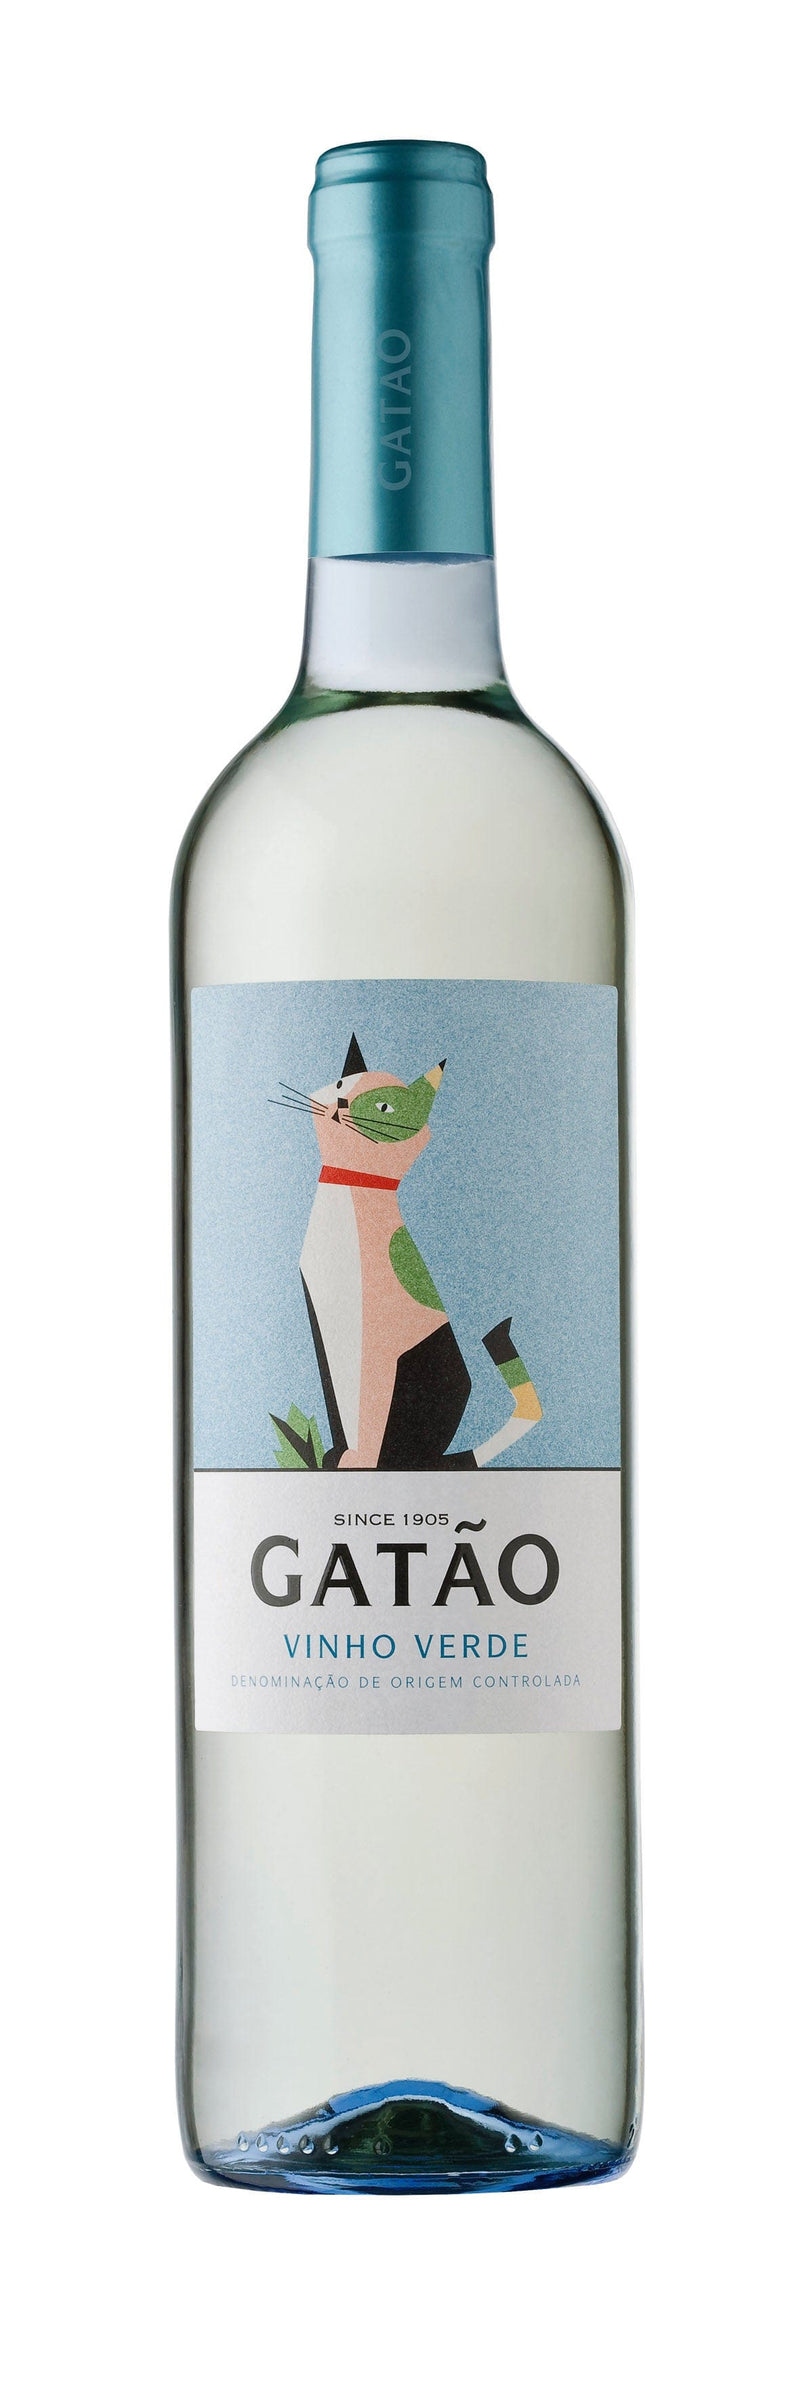 Gatao Branco White Bordeaux bottle 75cl